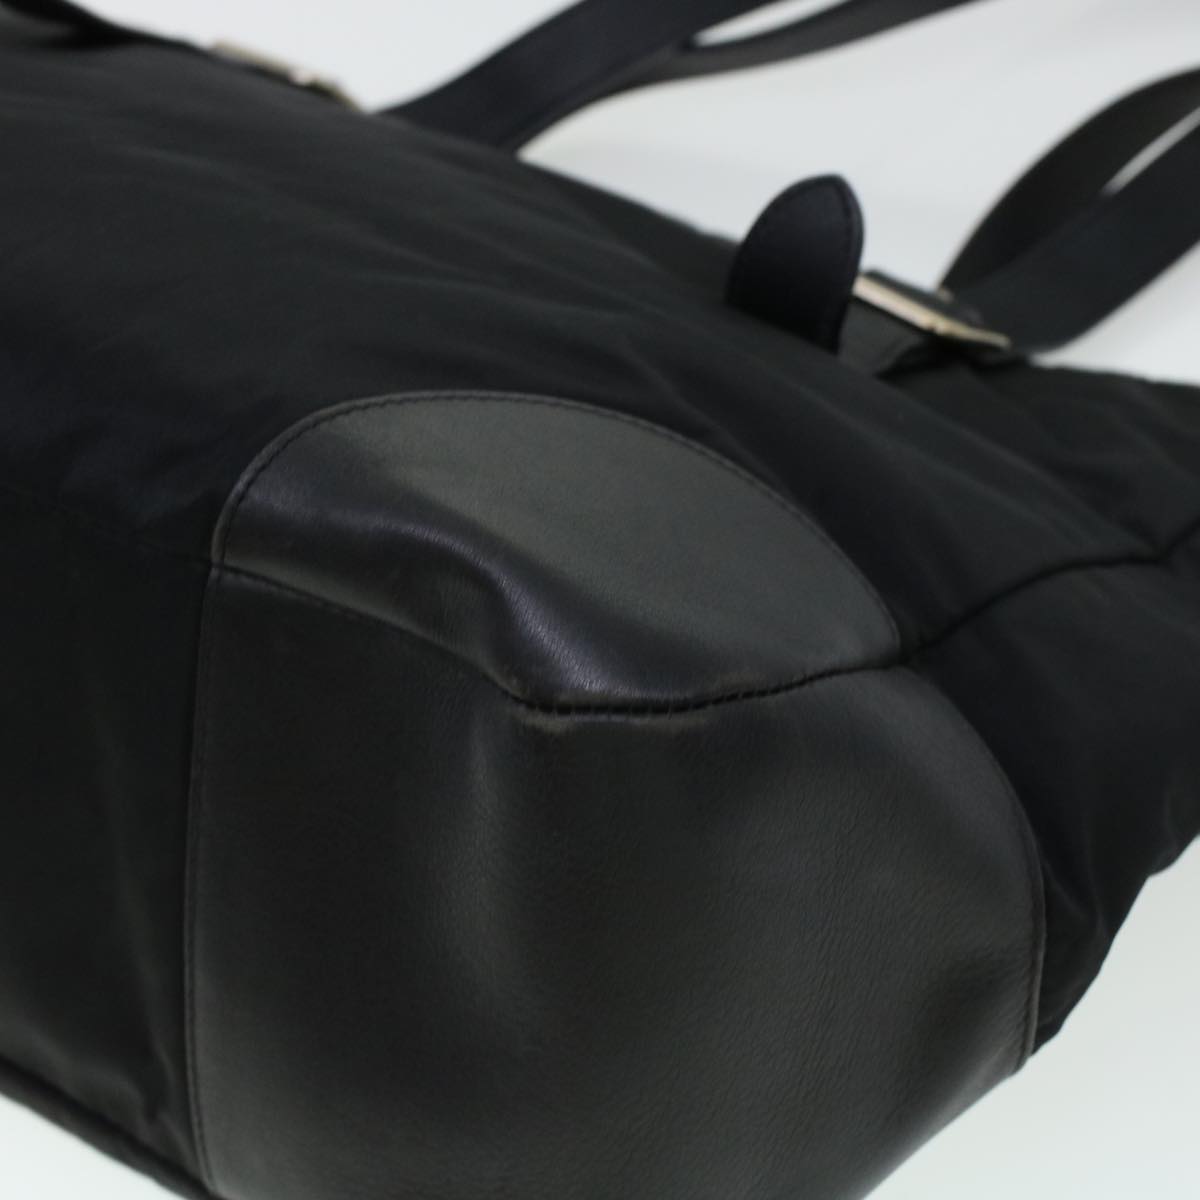 PRADA Tote Bag Nylon Leather Black Auth 41323